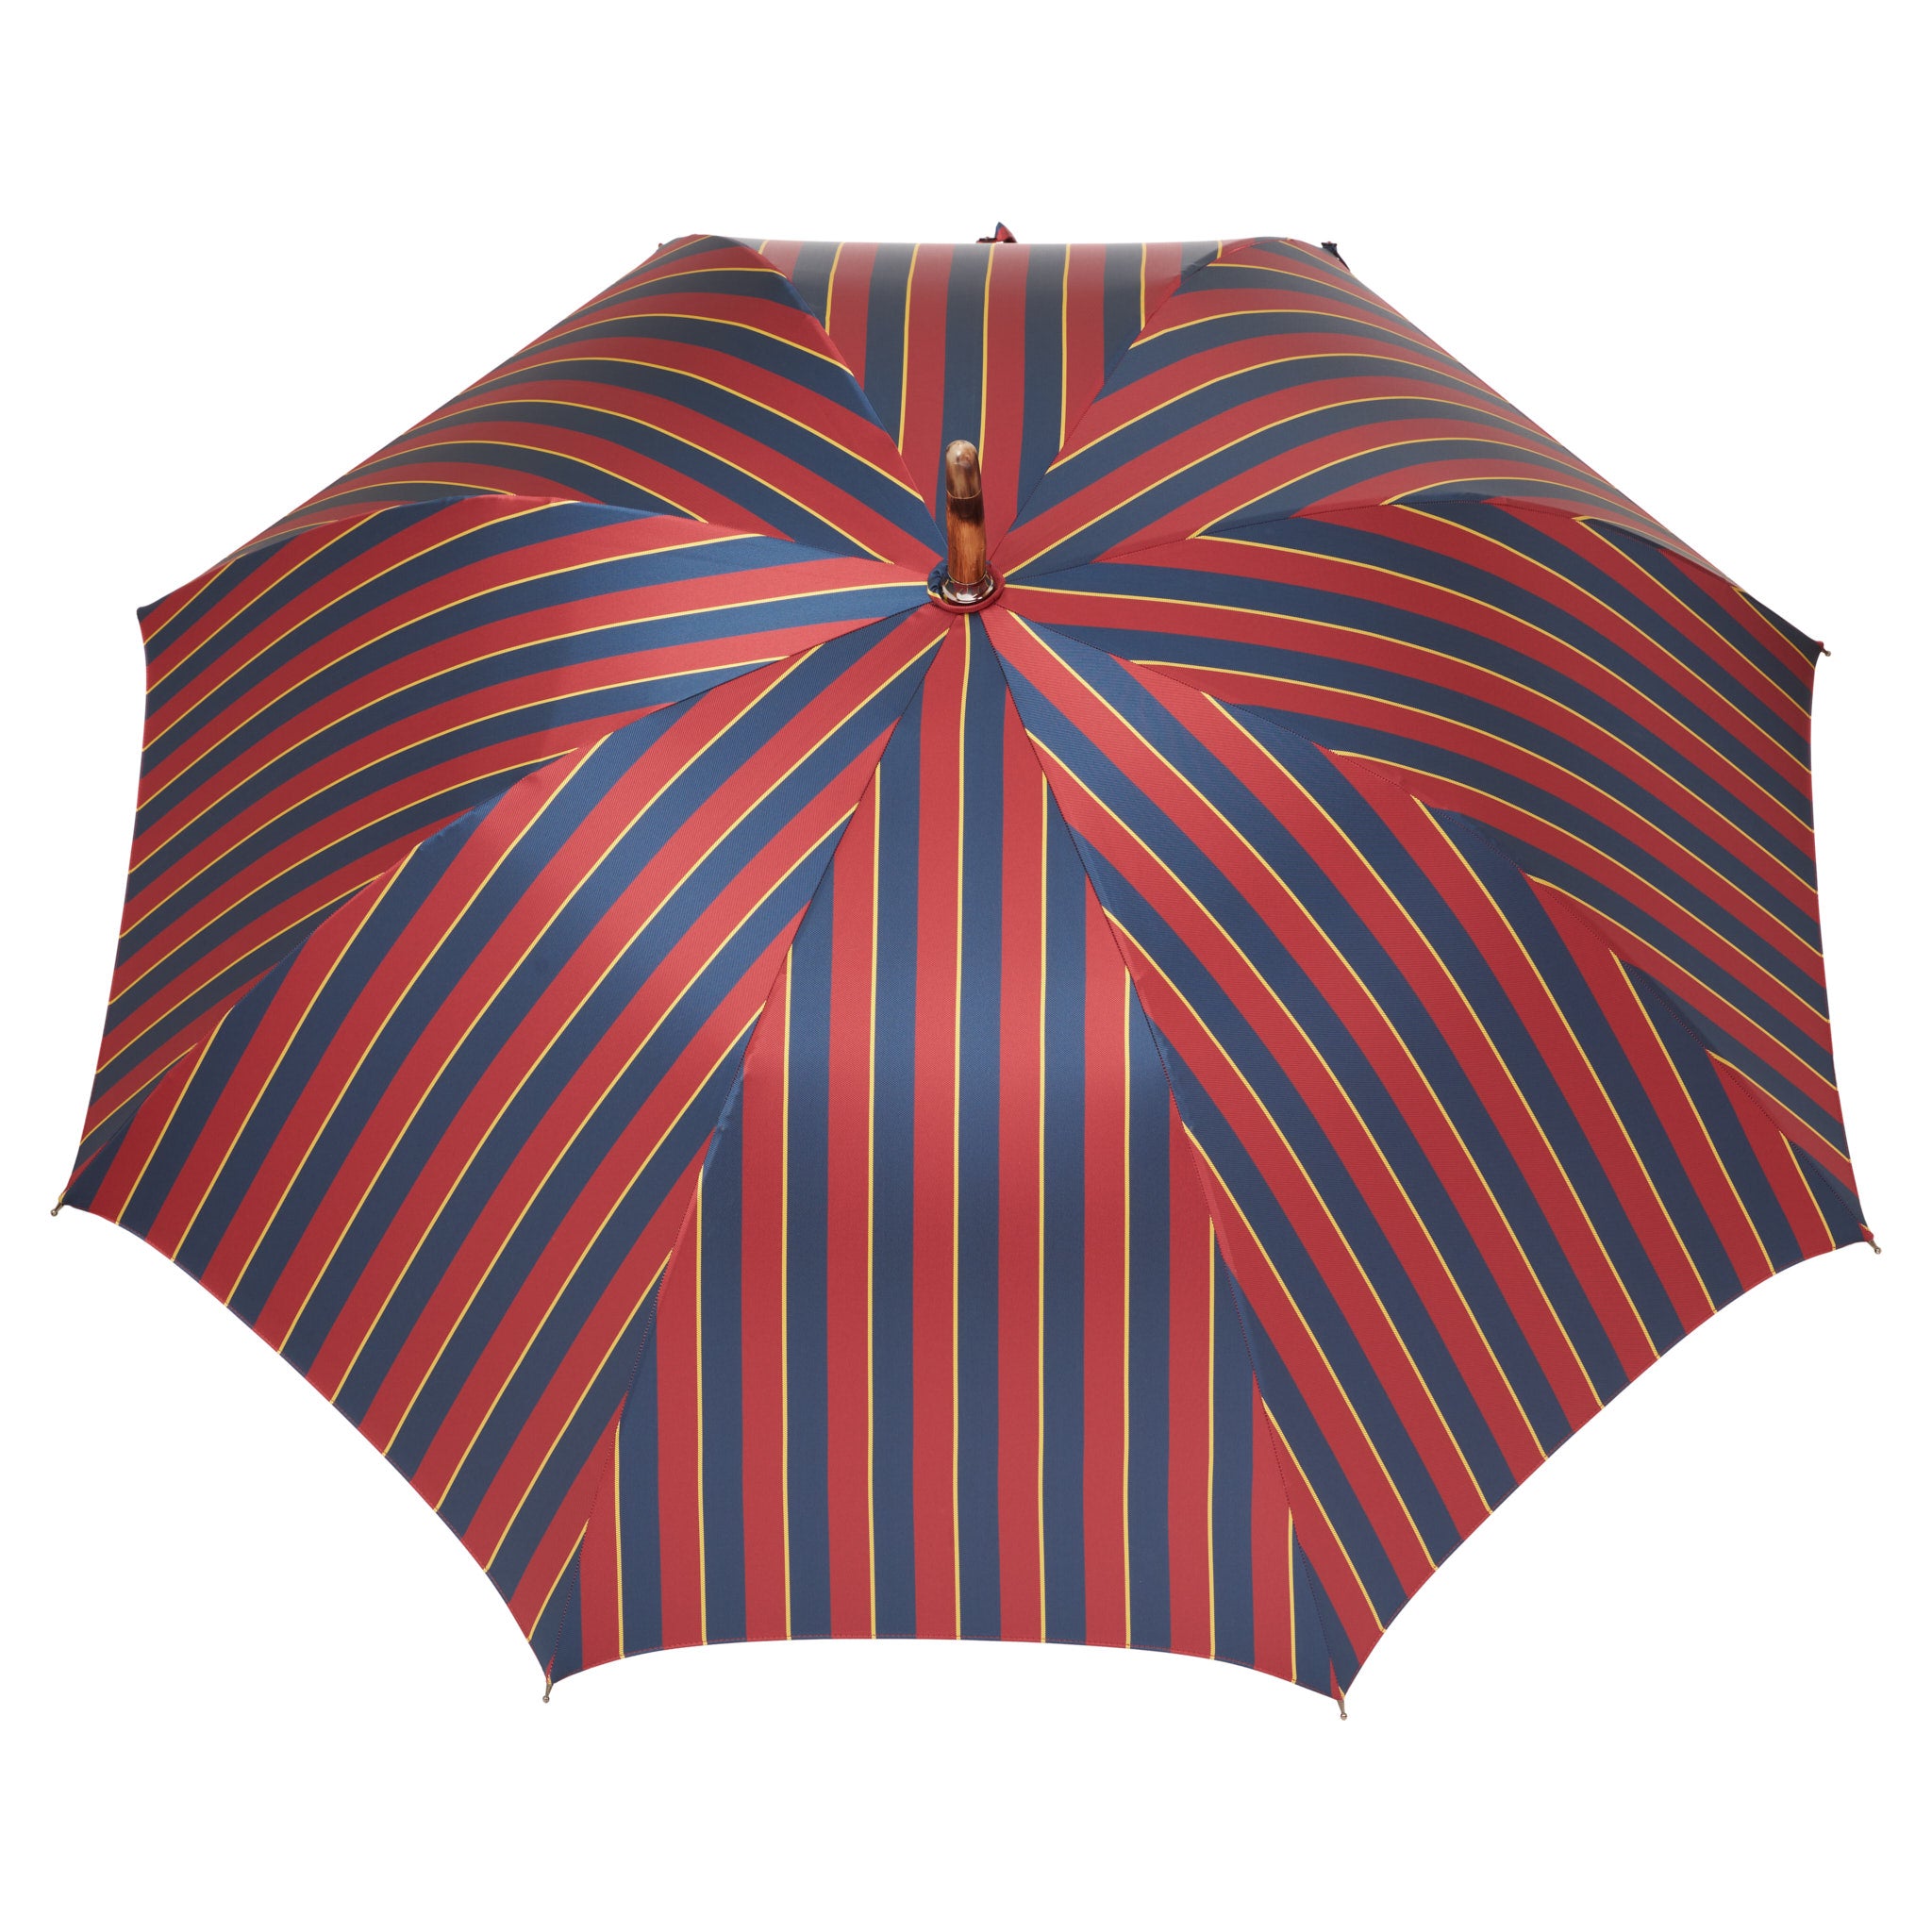 MARIO TALARICO Chestnut Wood Multi-Color Regimental Striped Umbrella MARIO TALARICO